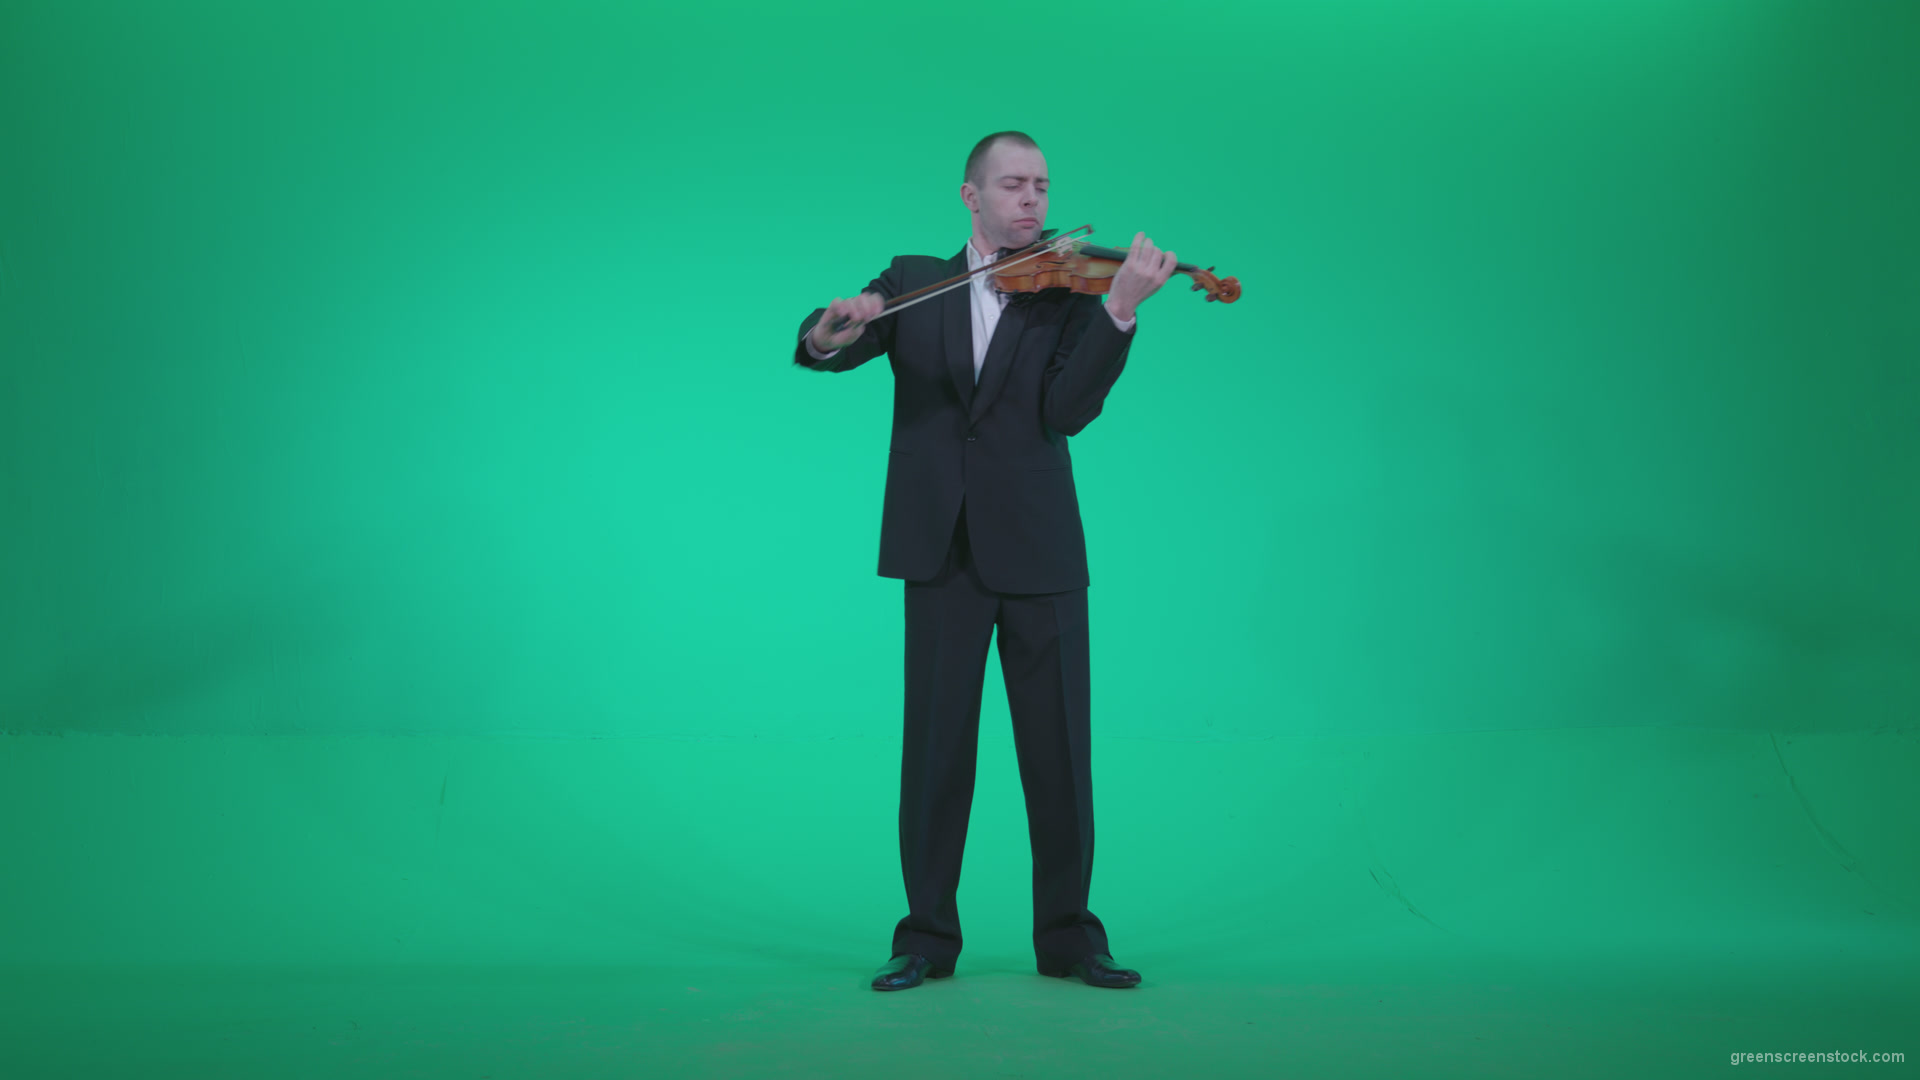 Professional-Violin-player-man-z1_005 Green Screen Stock